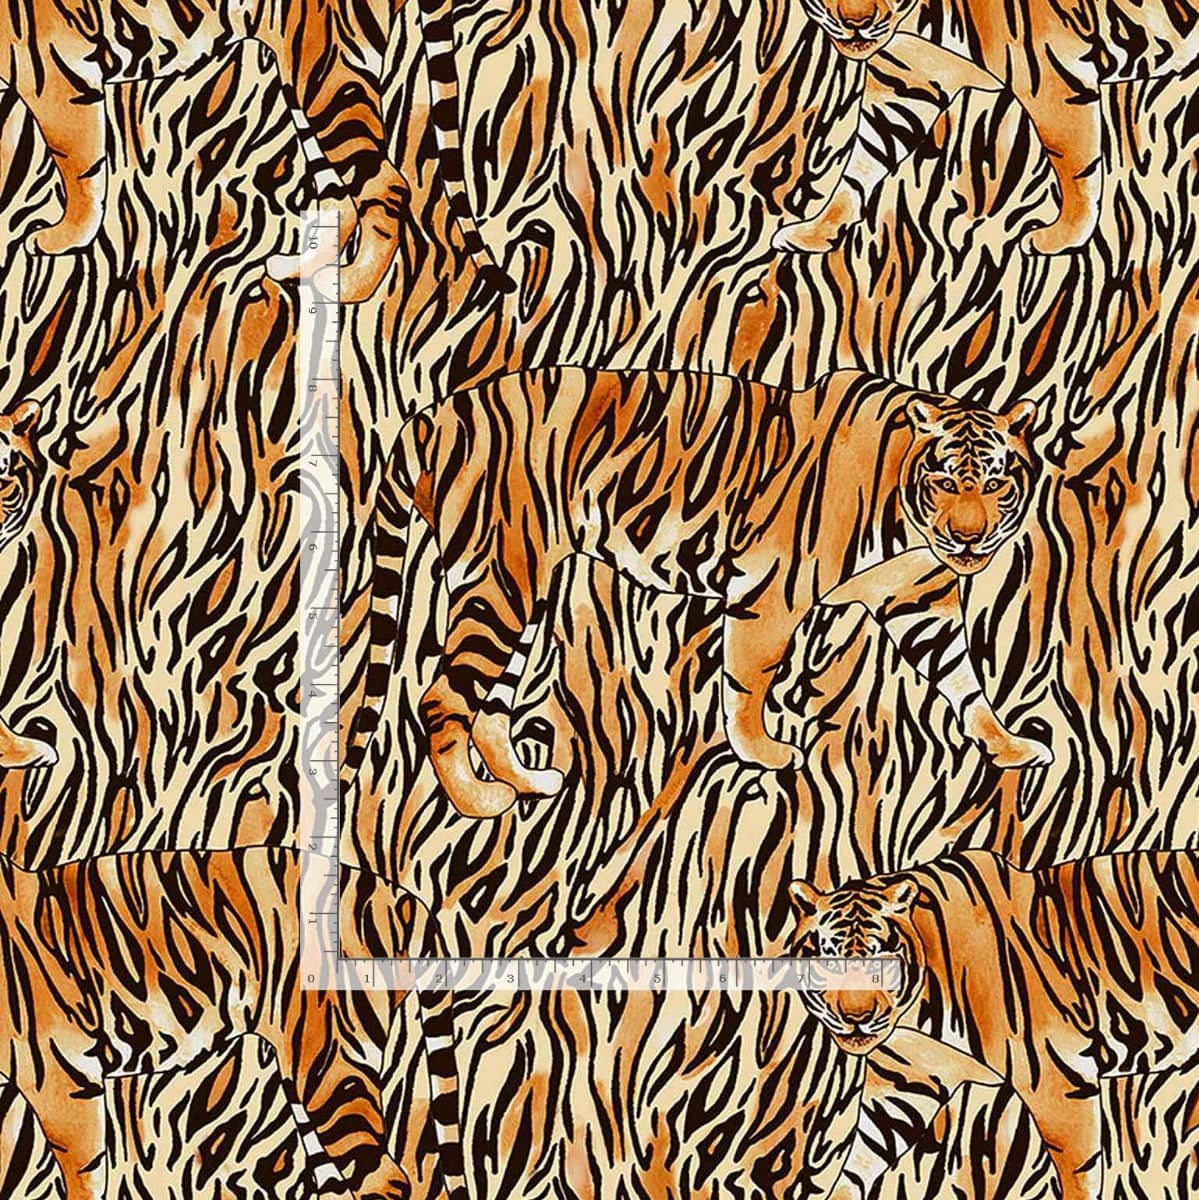 Timeless Treasures Fabric Tiger Print Tiger